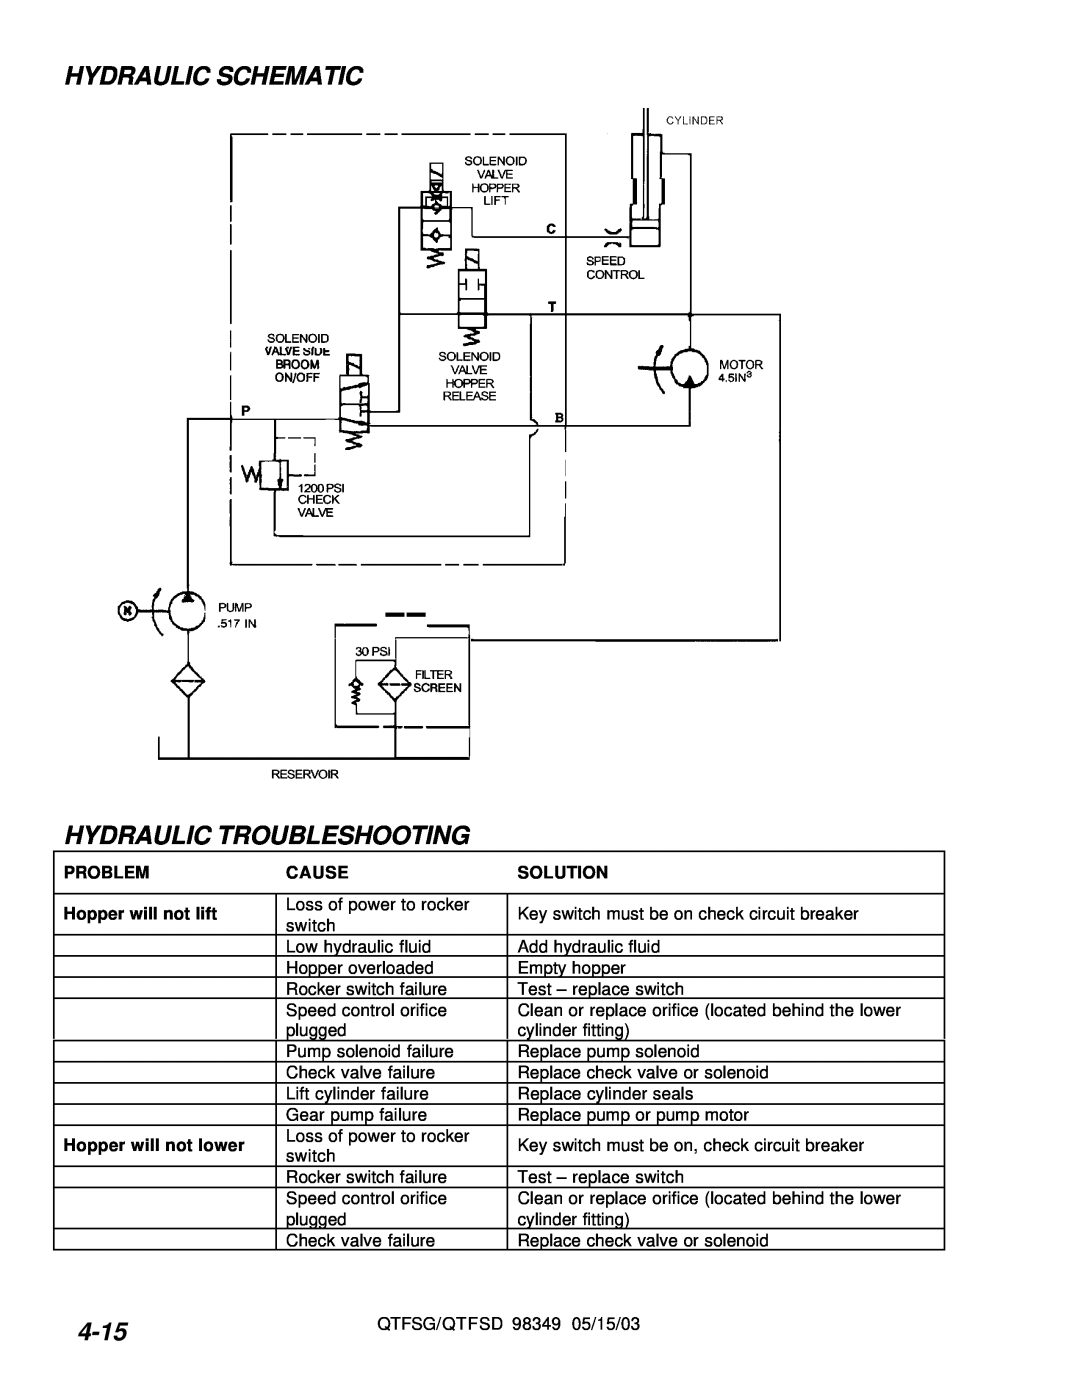 Windsor QTFSG, QTFSD Hydraulic Schematic Hydraulic Troubleshooting, 4-15, Problem, Cause, Solution, Hopper will not lift 